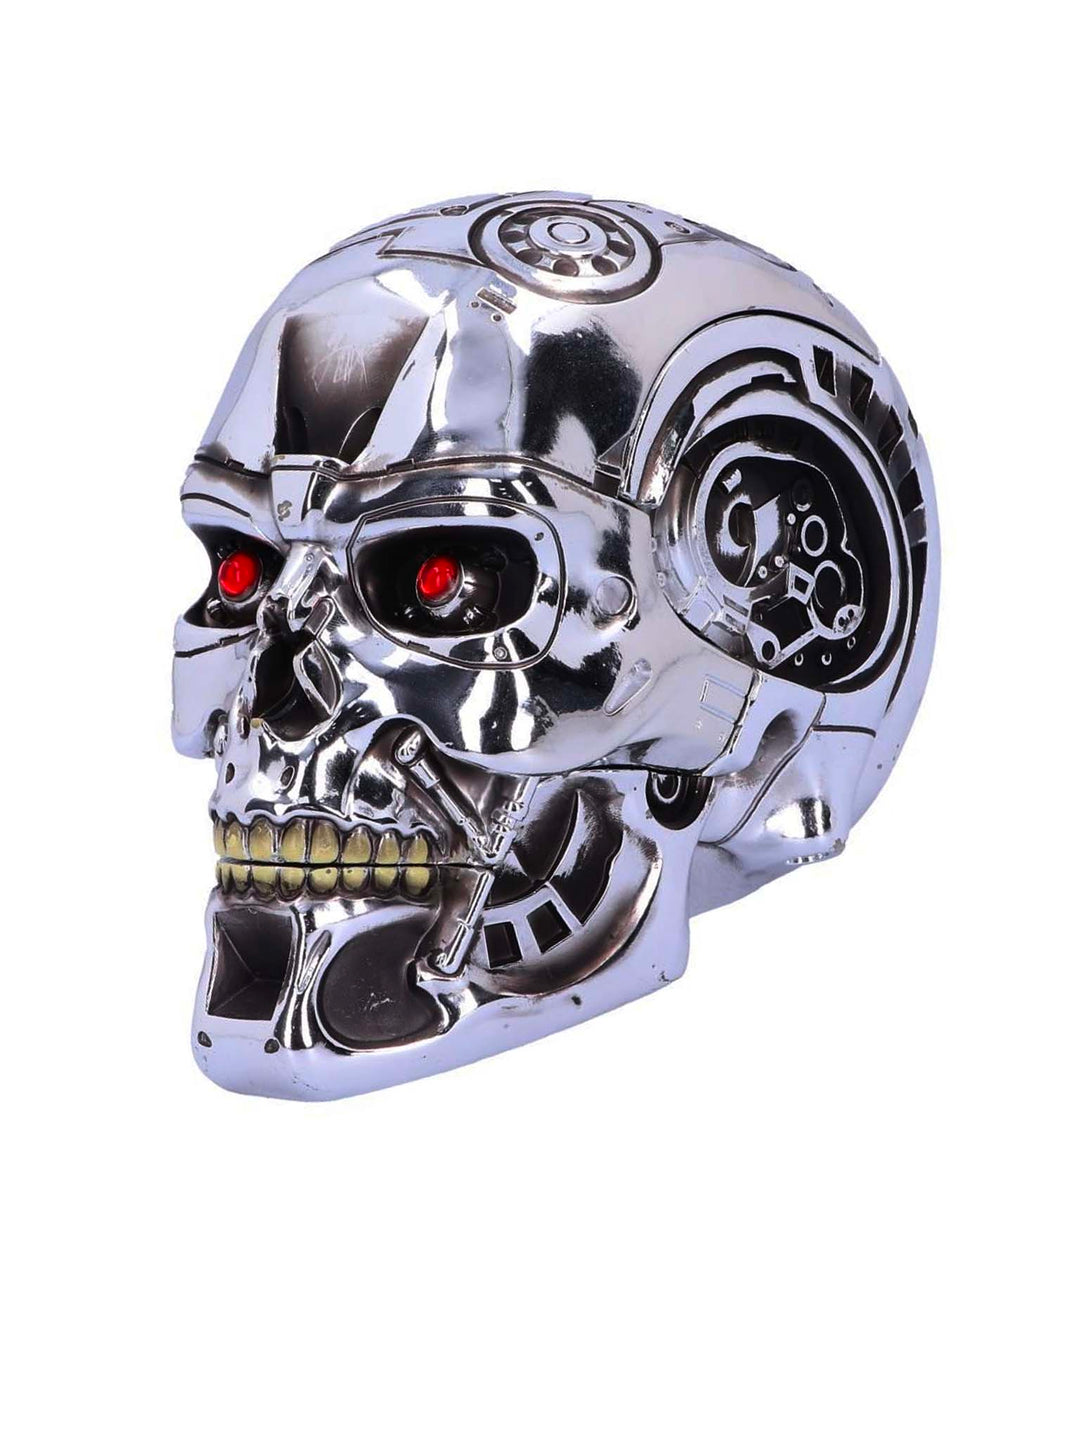 Terminator 2 Skull Box, T-800 Terminator Robotic Head Box